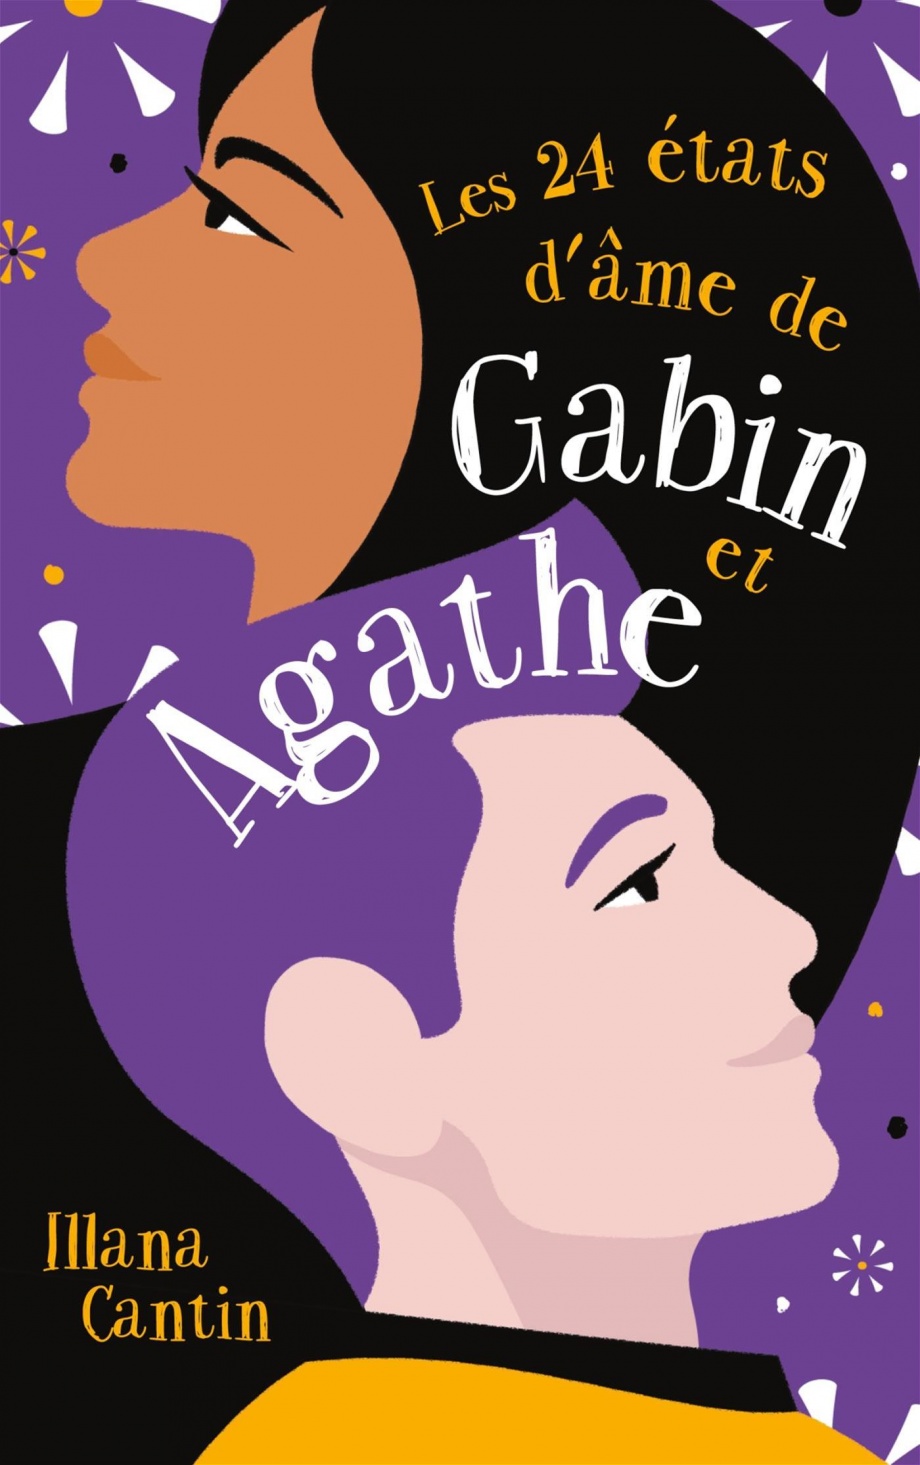 Les 24 états d'âme de Gabin et Agathe de Illana Cantin